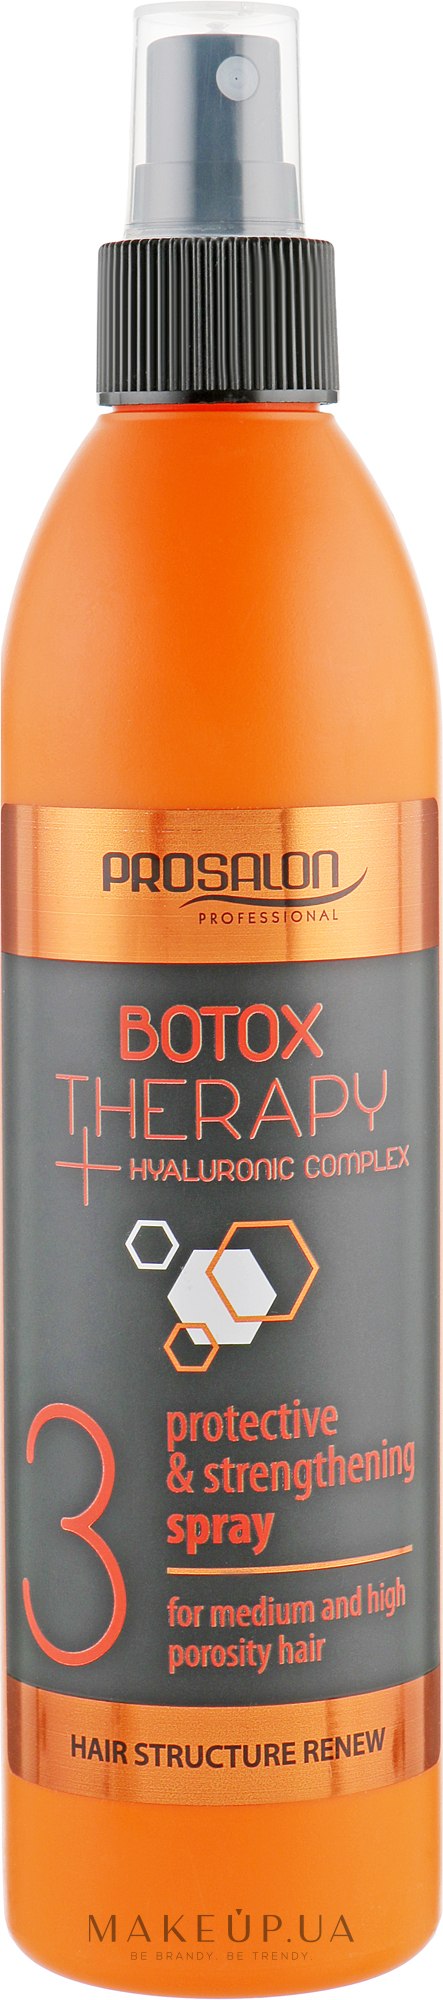 Антивозрастной спрей для волос - Prosalon Botox Therapy Protective & Strengthening 3 Spray — фото 275ml